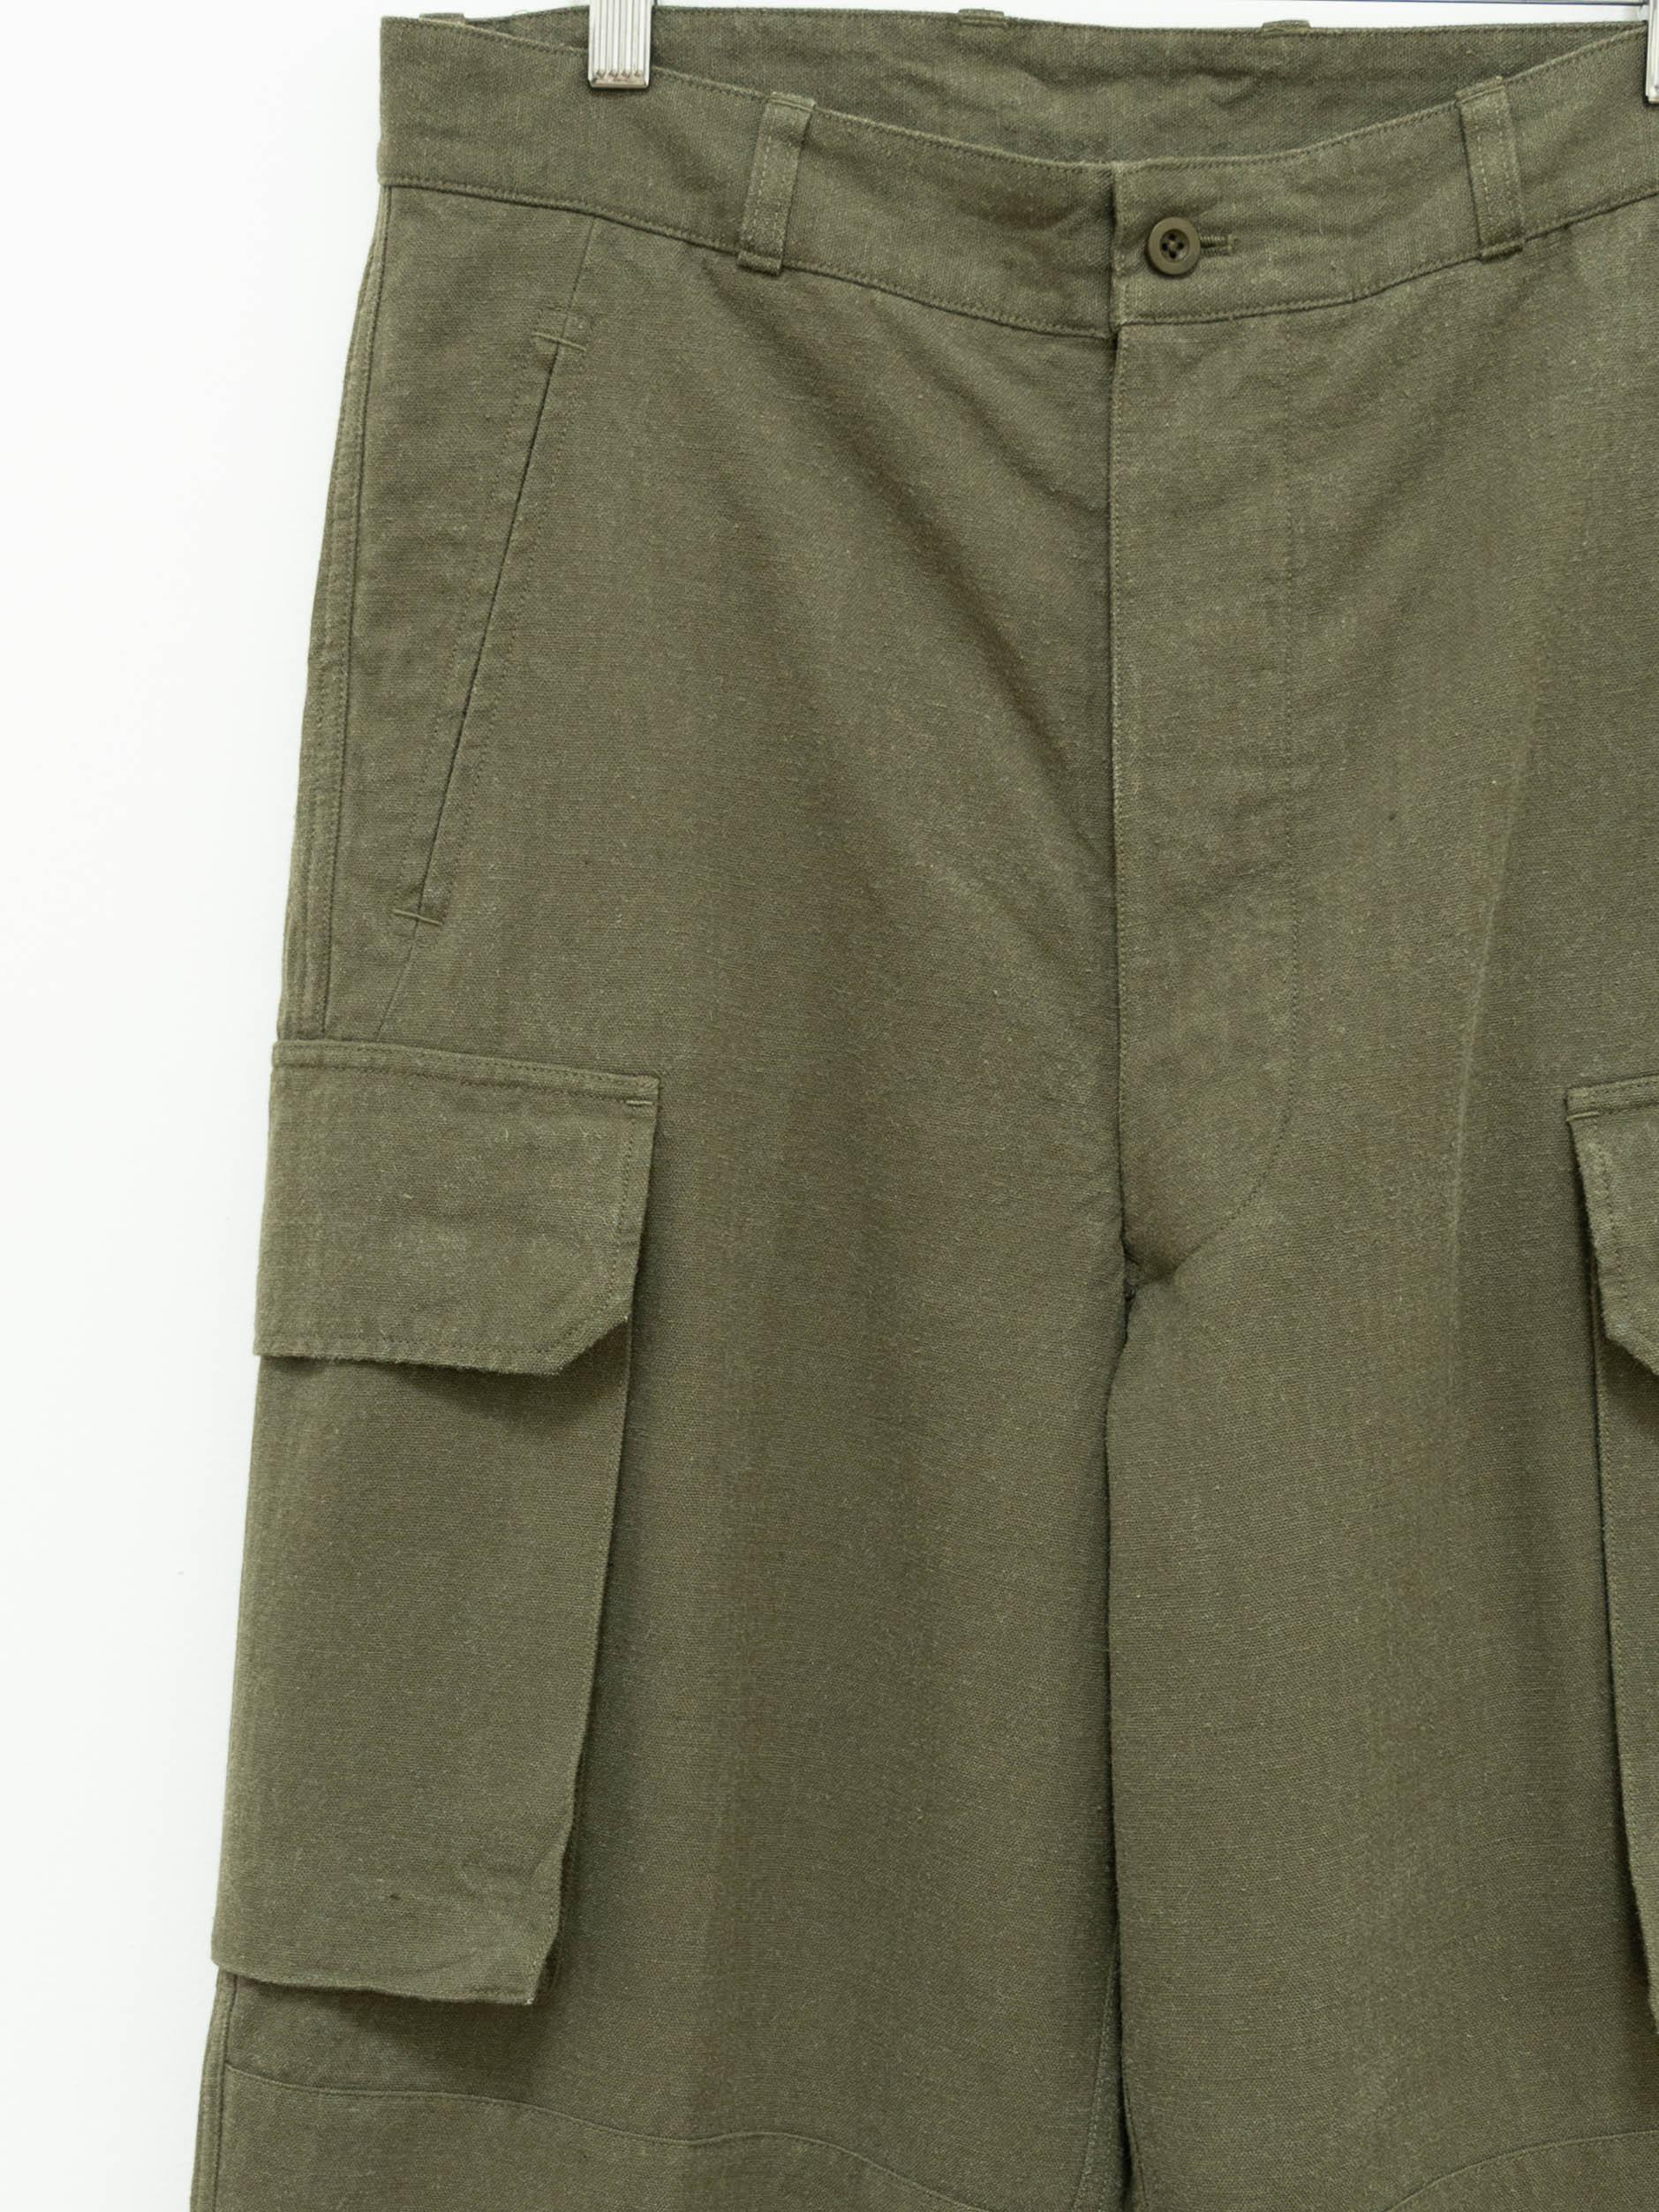 Namu Shop - Kaptain Sunshine Washed Co/Li/Silk Herringbone Fatigue Pants - Olive